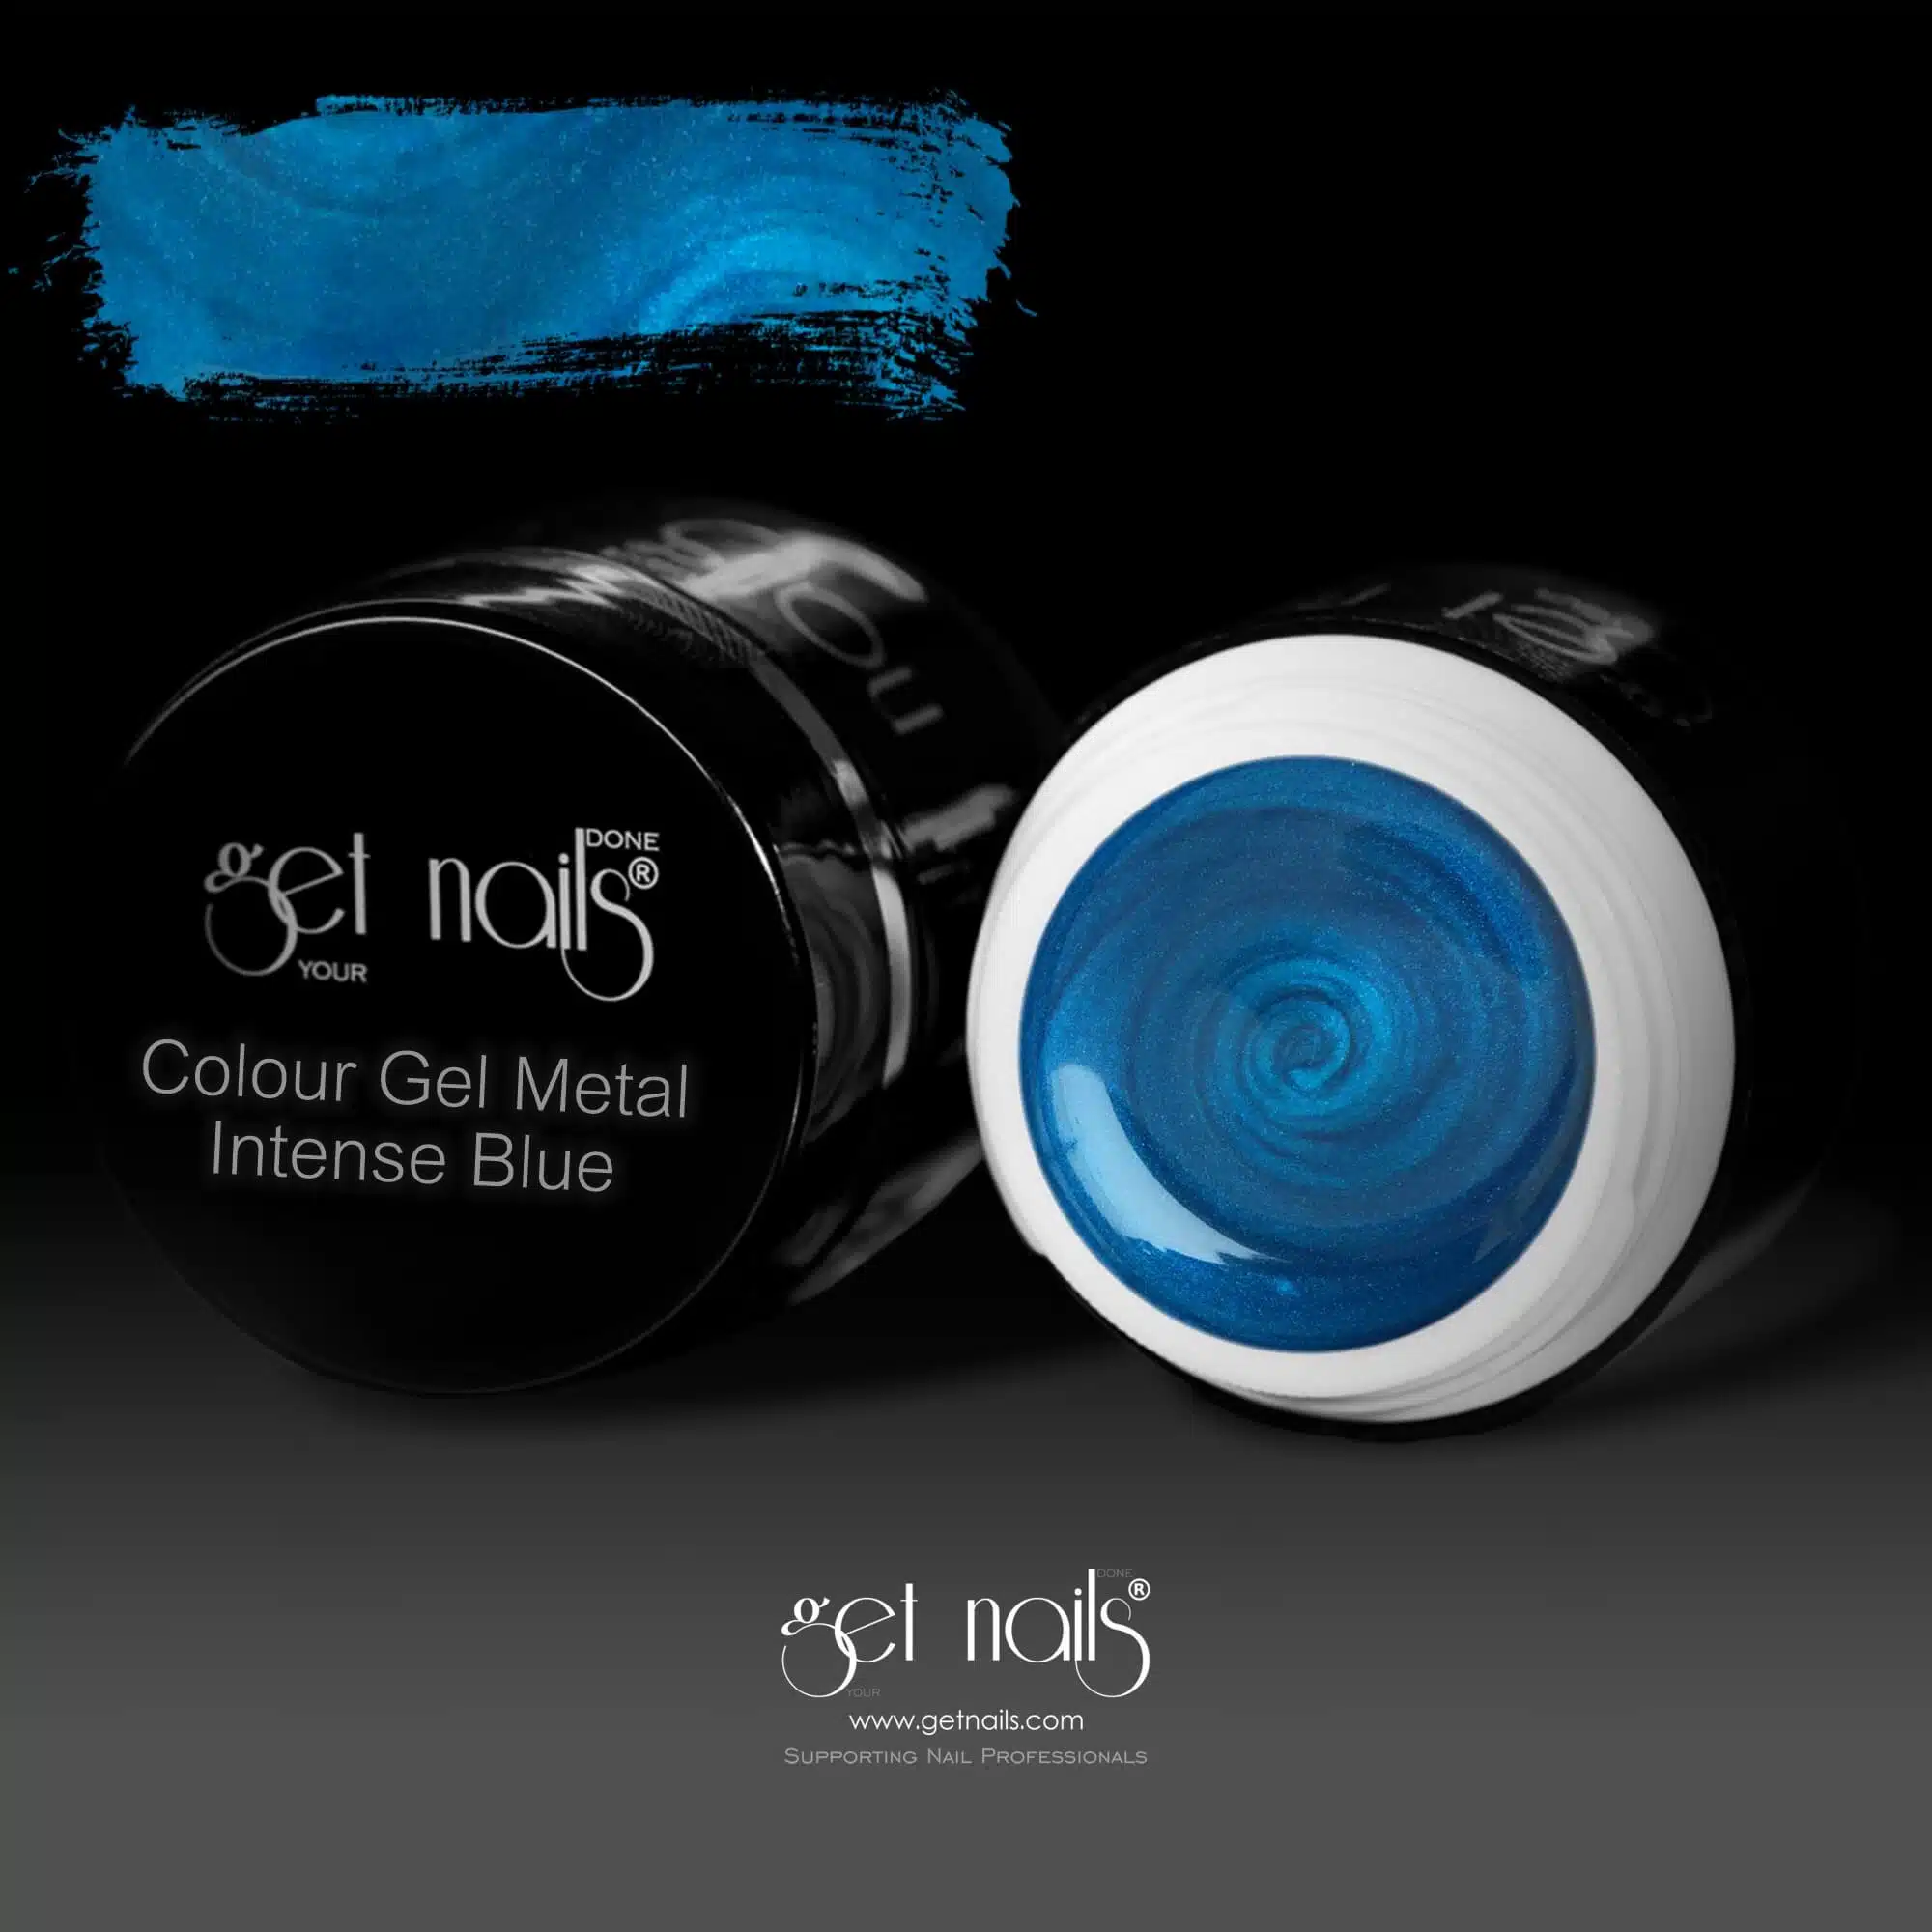 Get Nails Austria - Цветной гель Metal Intense Blue 5g